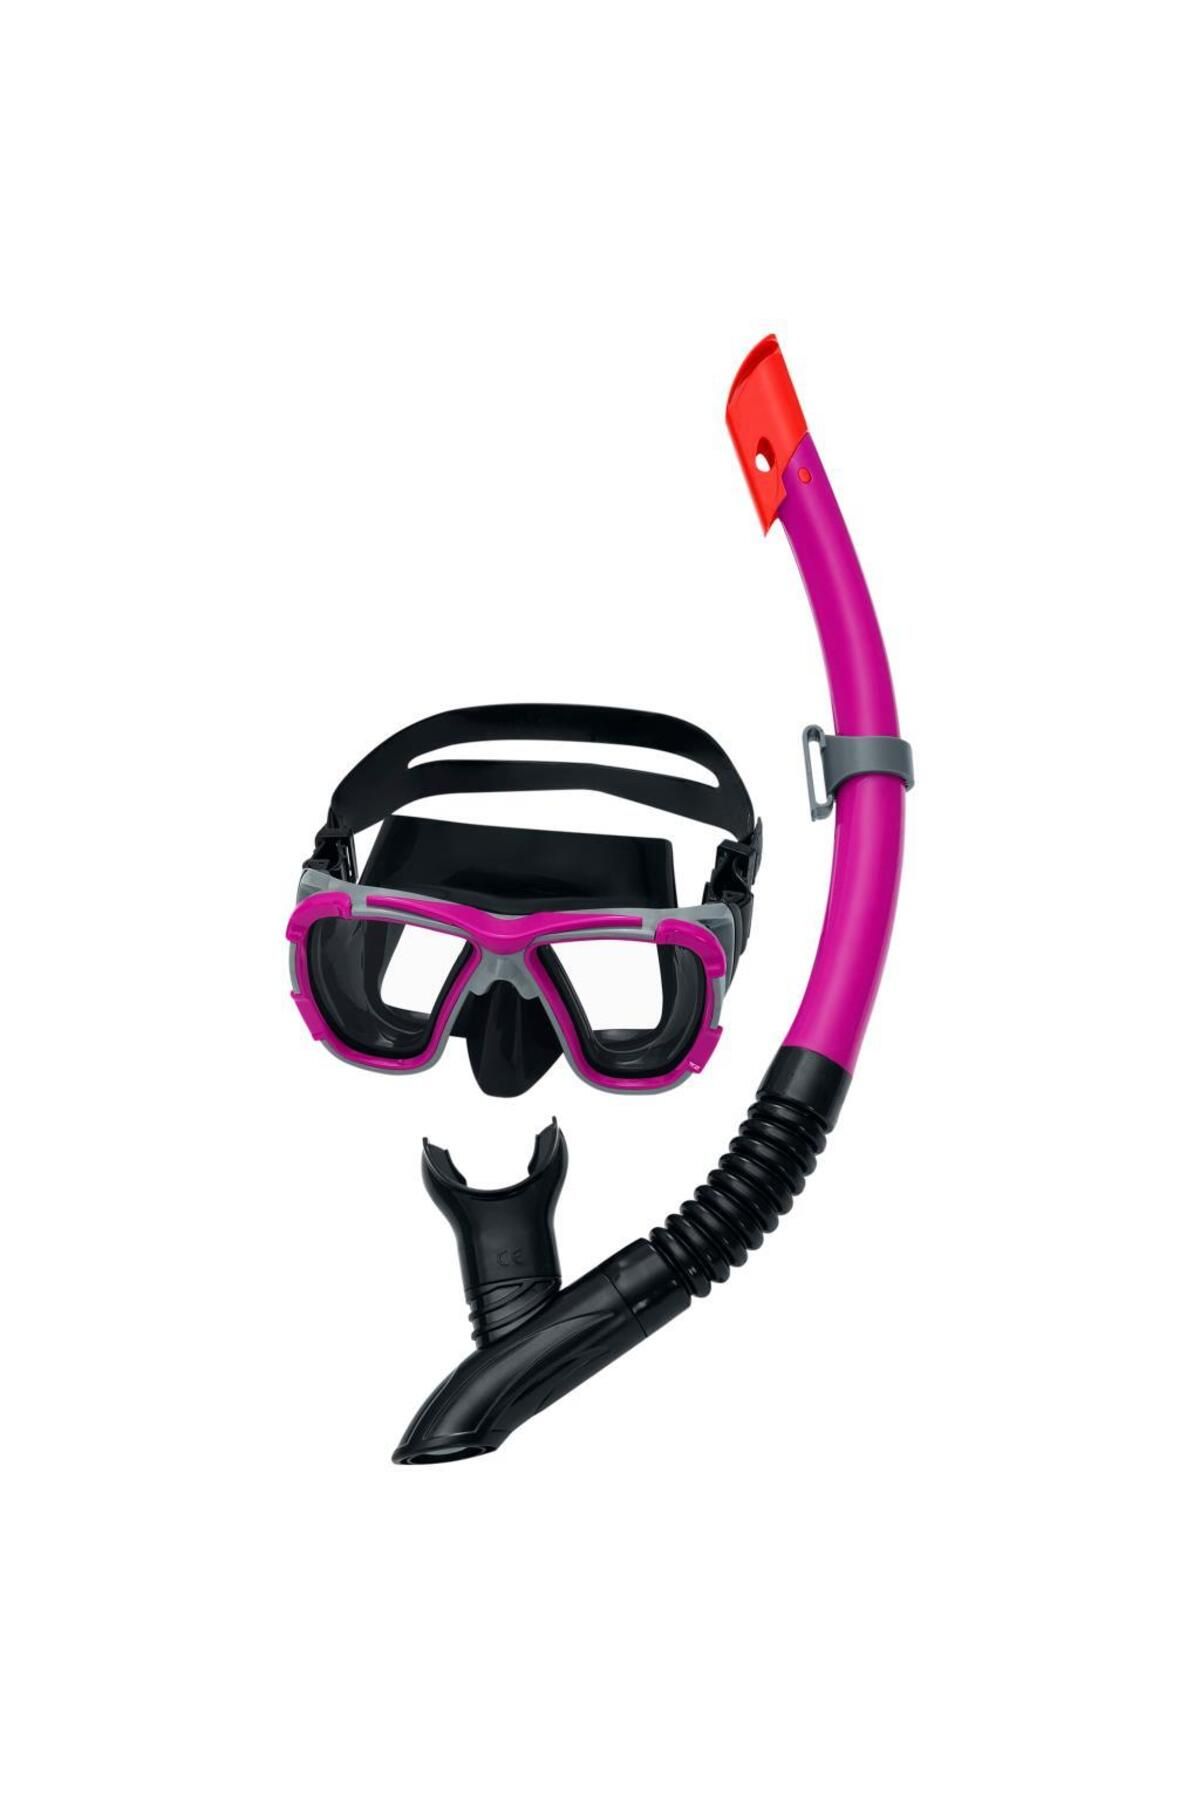 Lisinya Bestway Maske Snorkel Set inspira Pro - 24021 (Lisinya)